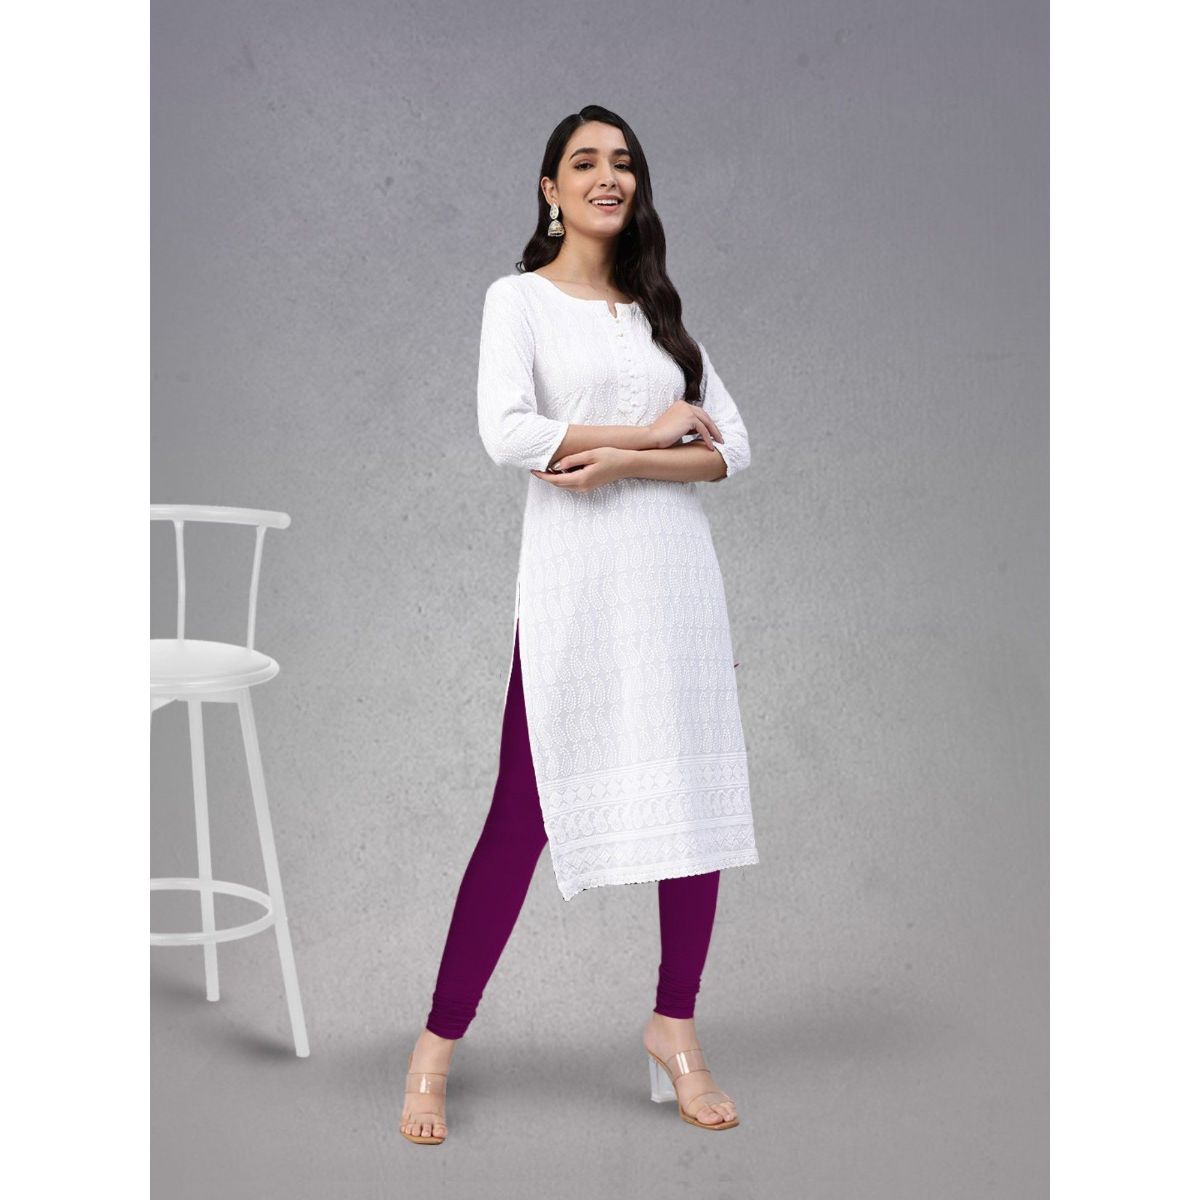 Buy SPIFFY Women Churidar Cotton Spendex Legging HOT Pink at Amazon.in